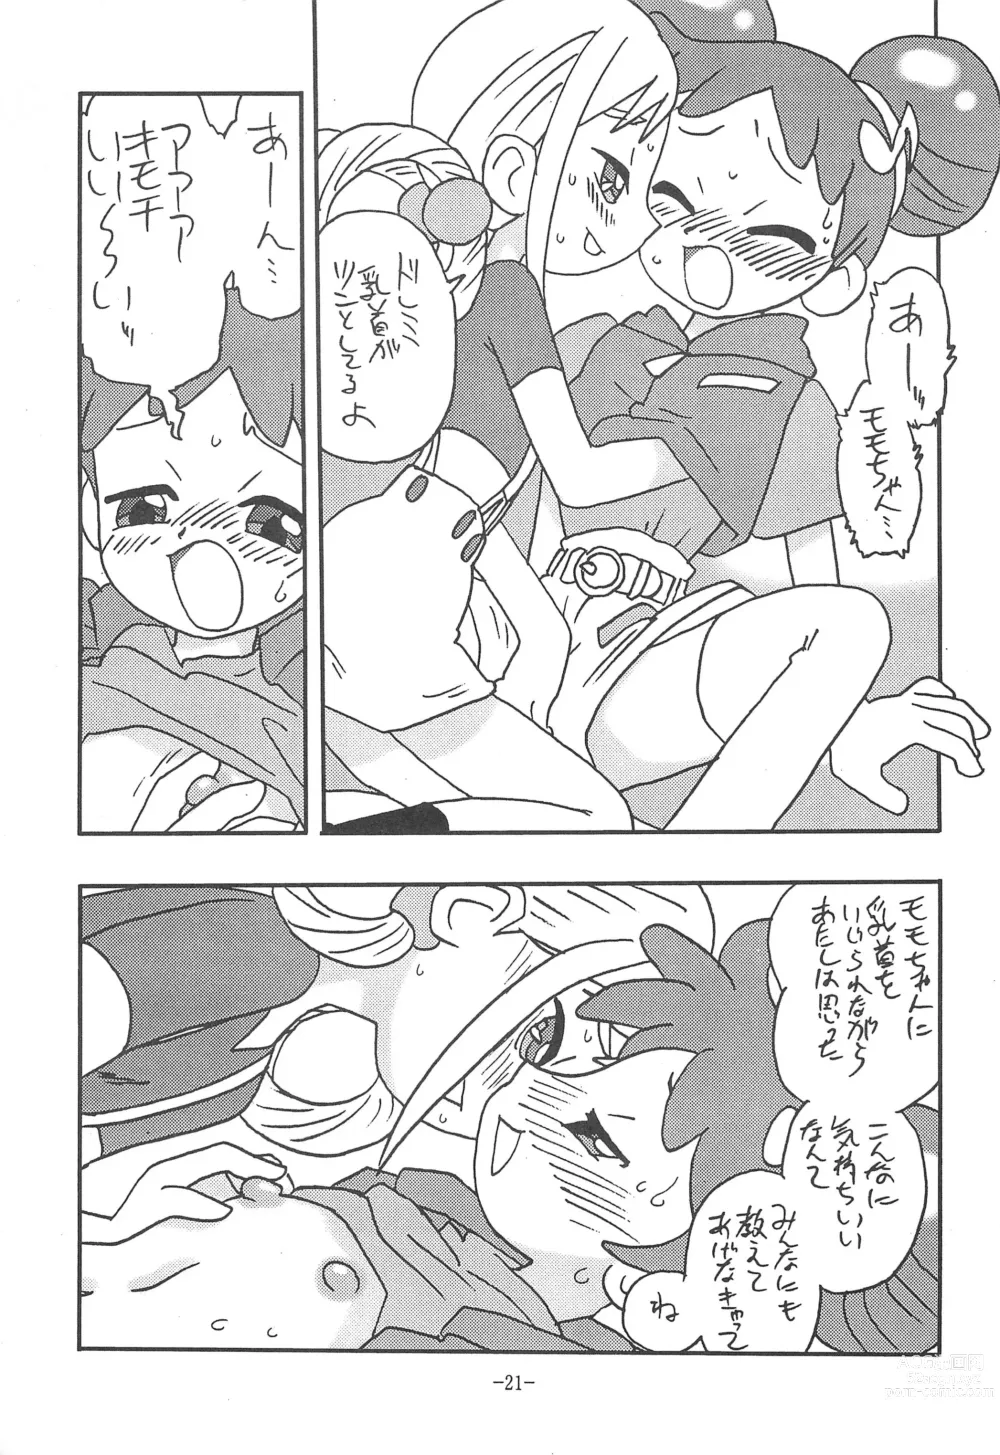 Page 21 of doujinshi CAN YOU KEEP A SECRET?